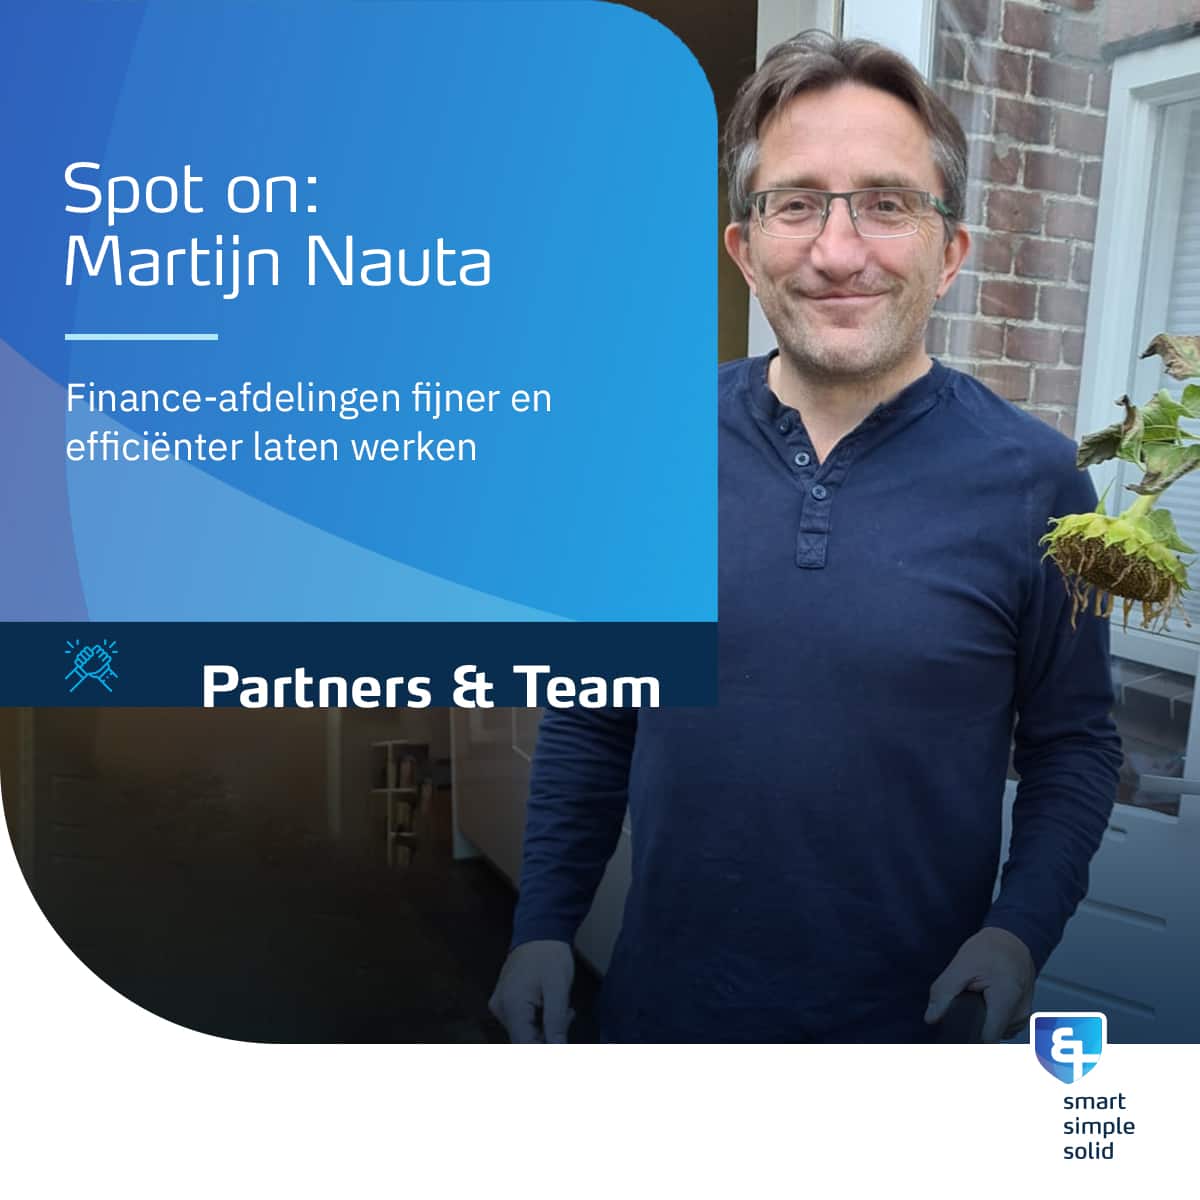 Spot on - Martijn Nauta – Finance-afdelingen fijner en efficiënter laten werken